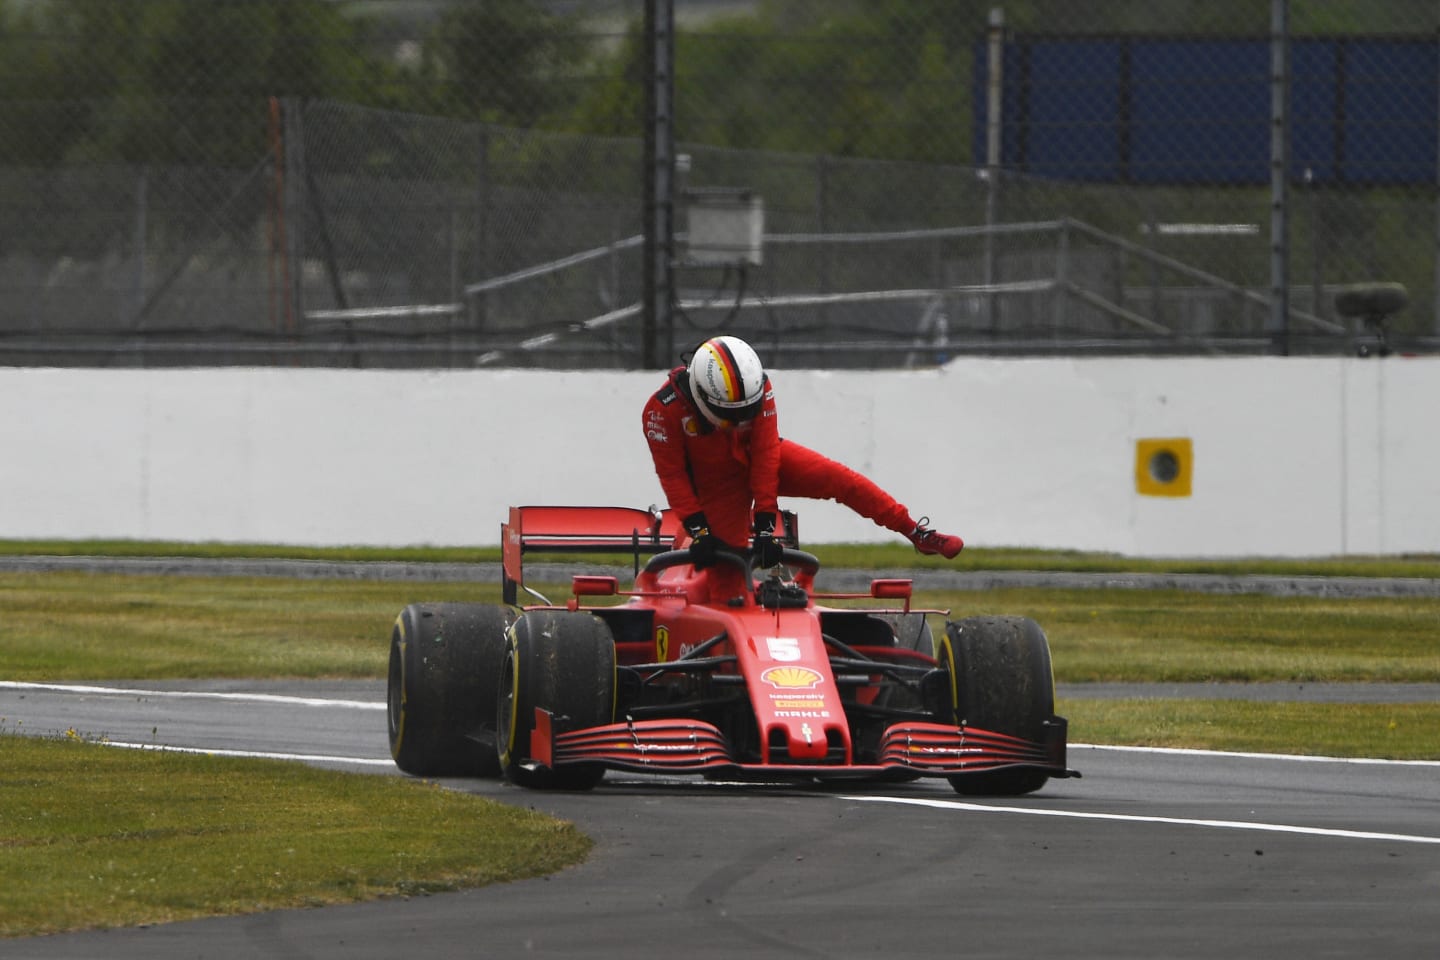 NORTHAMPTON, ENGLAND - AUGUST 07: Sebastian Vettel of Germany driving the (5) Scuderia Ferrari